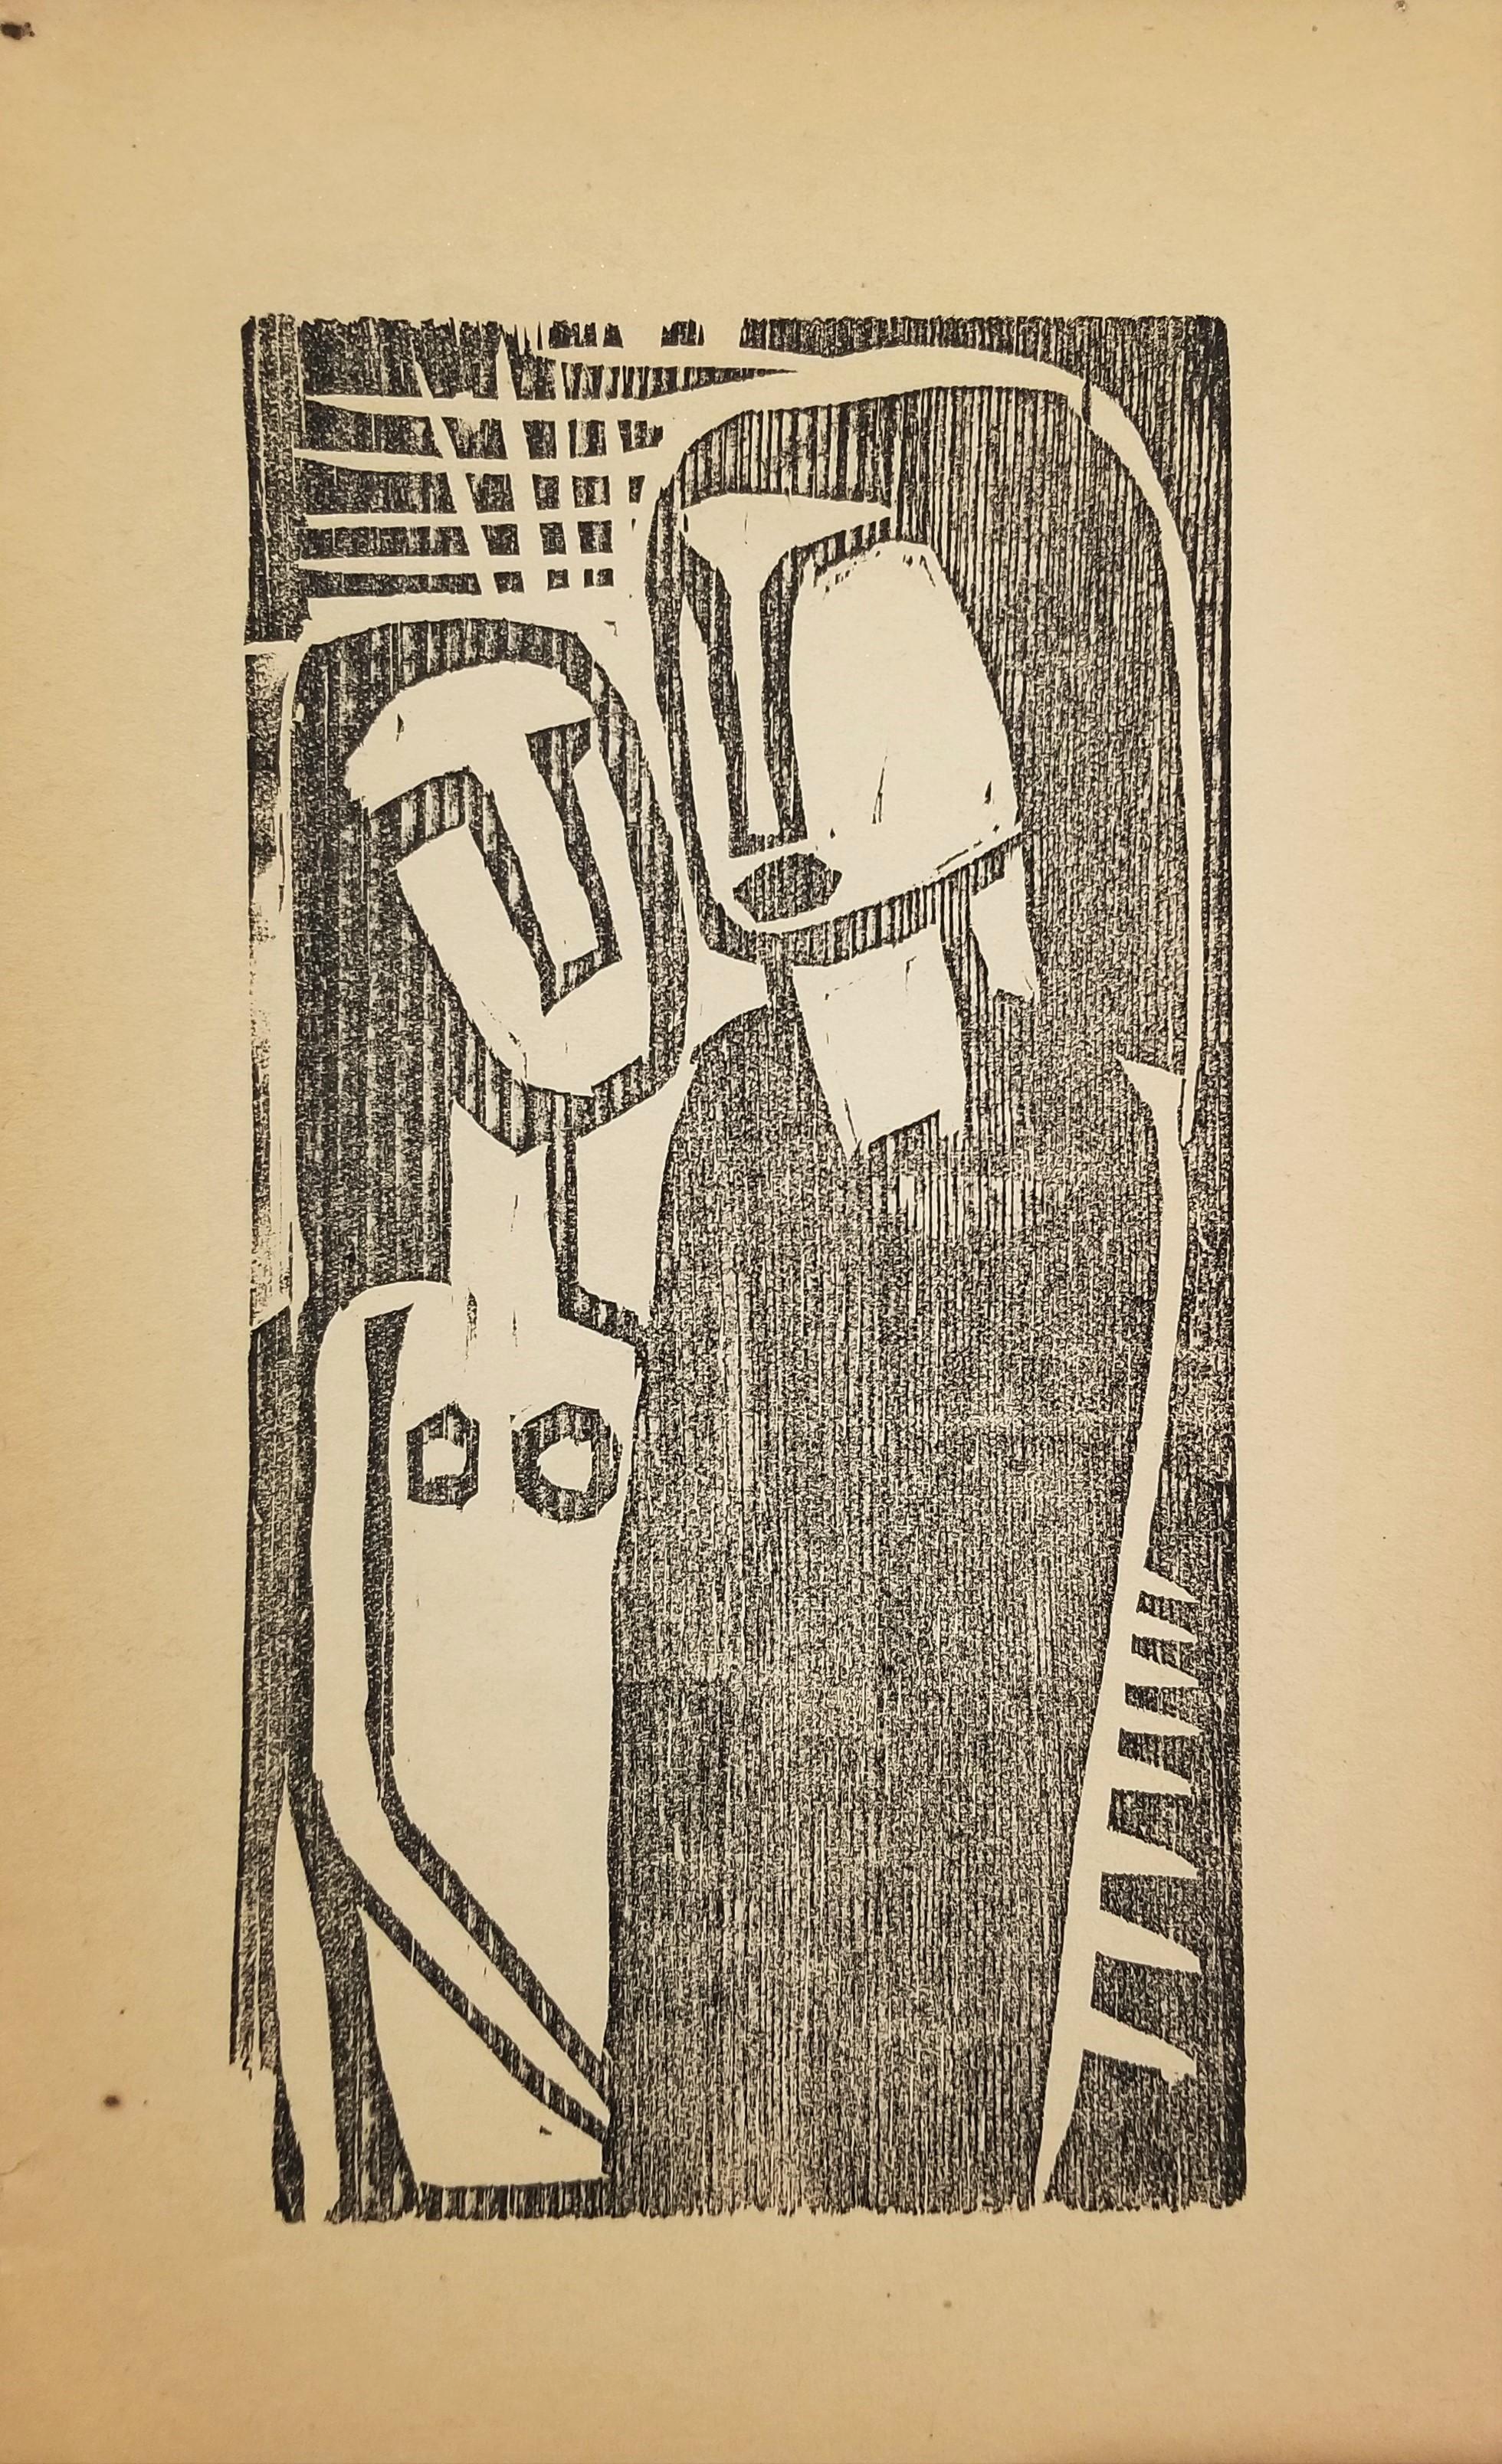 Bekleidete und nackte Frau (Femme vêtue et nue) /// Expressionnisme allemand  - Print de Karl Schmidt-Rottluff